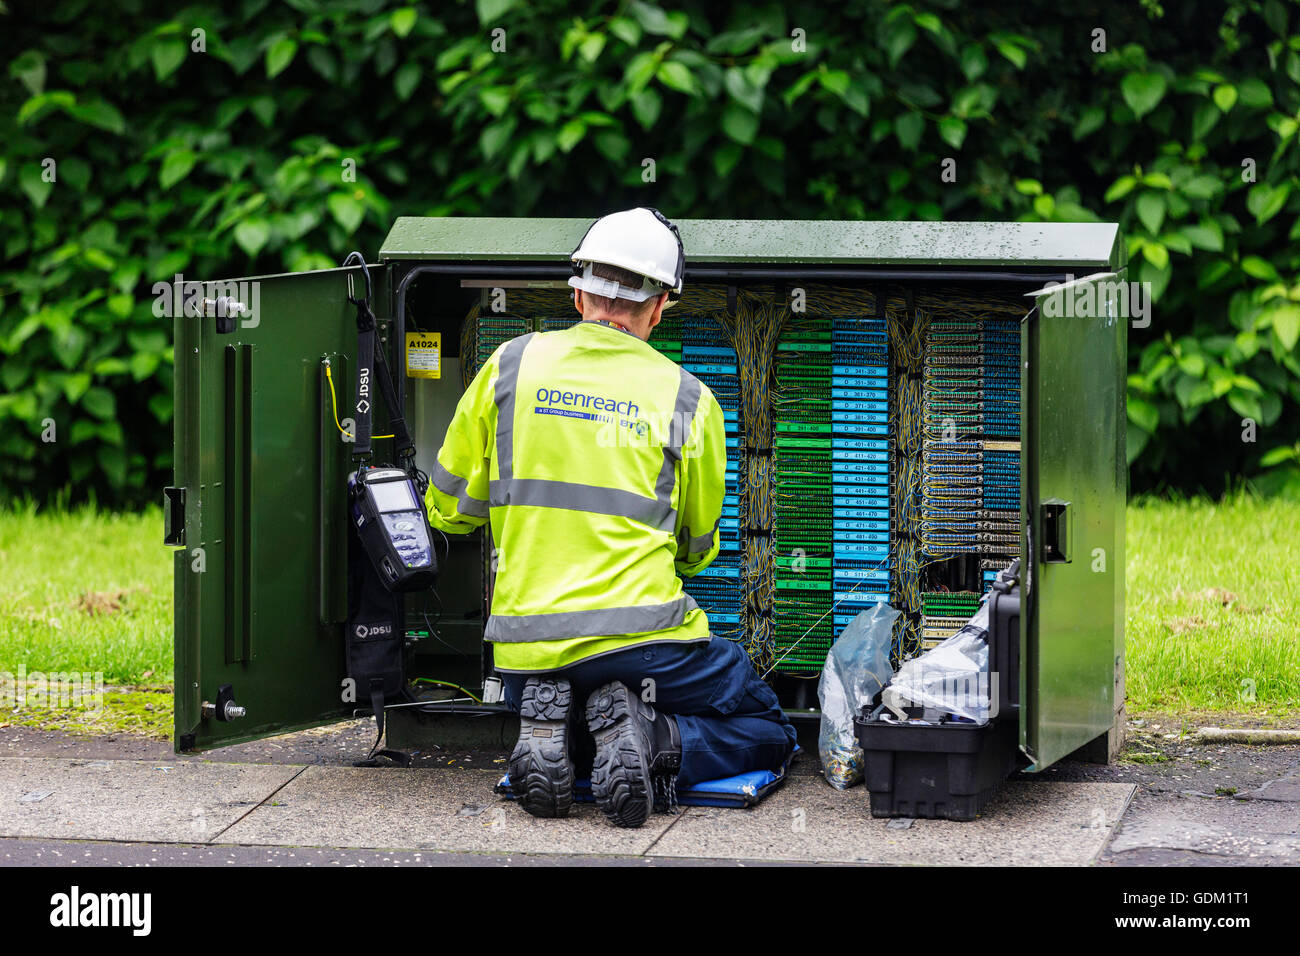 Openreach telephone and internet technician repairing a switch box, Scotland, UK Stock Photo